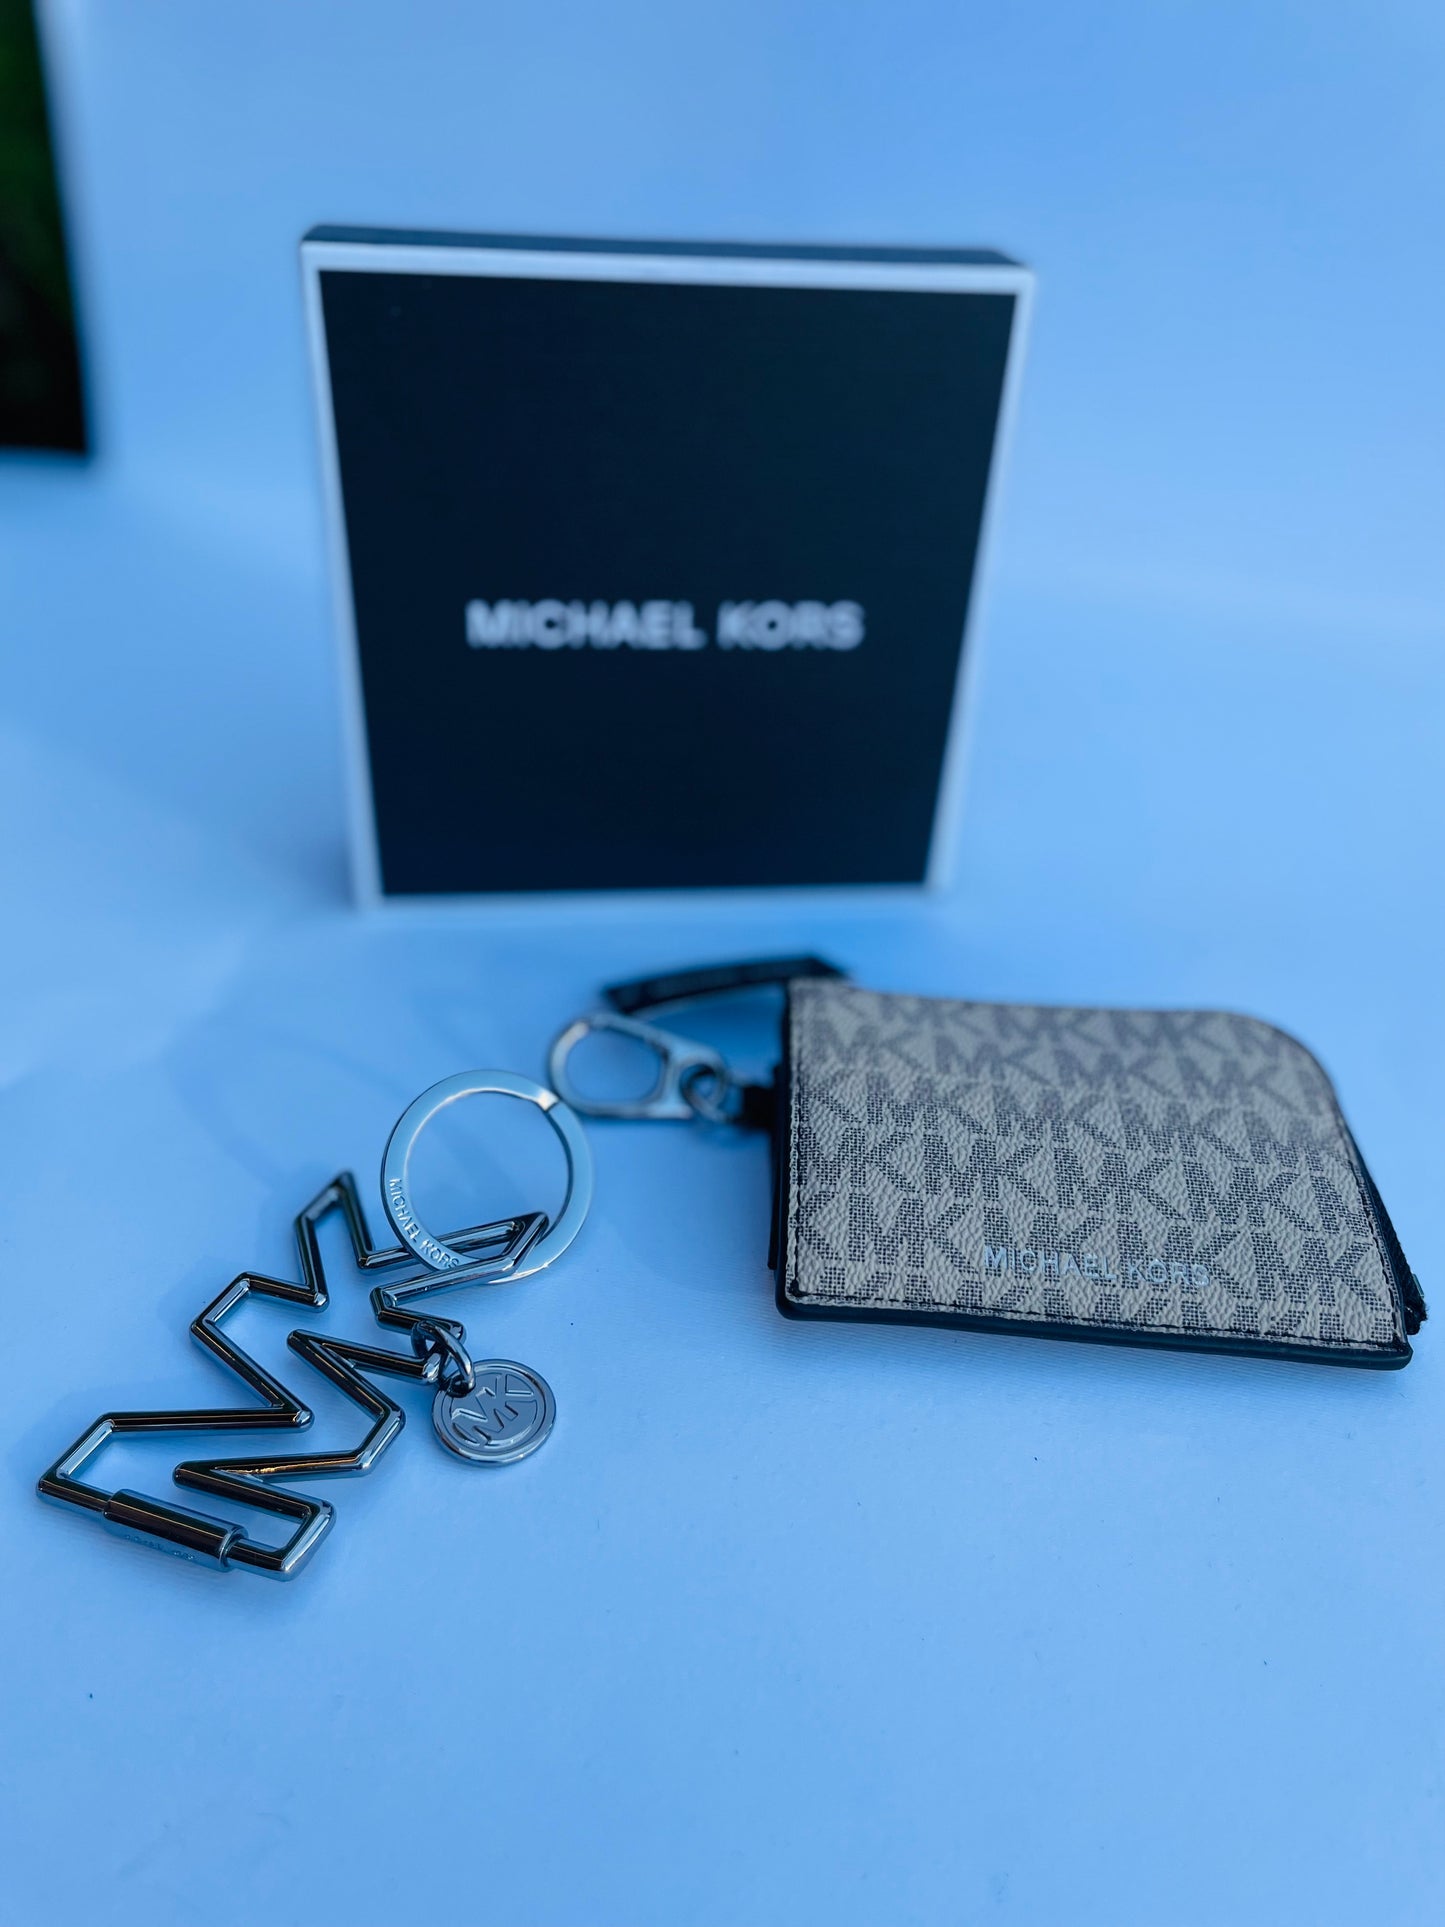 Michael kors wallet & keychain set